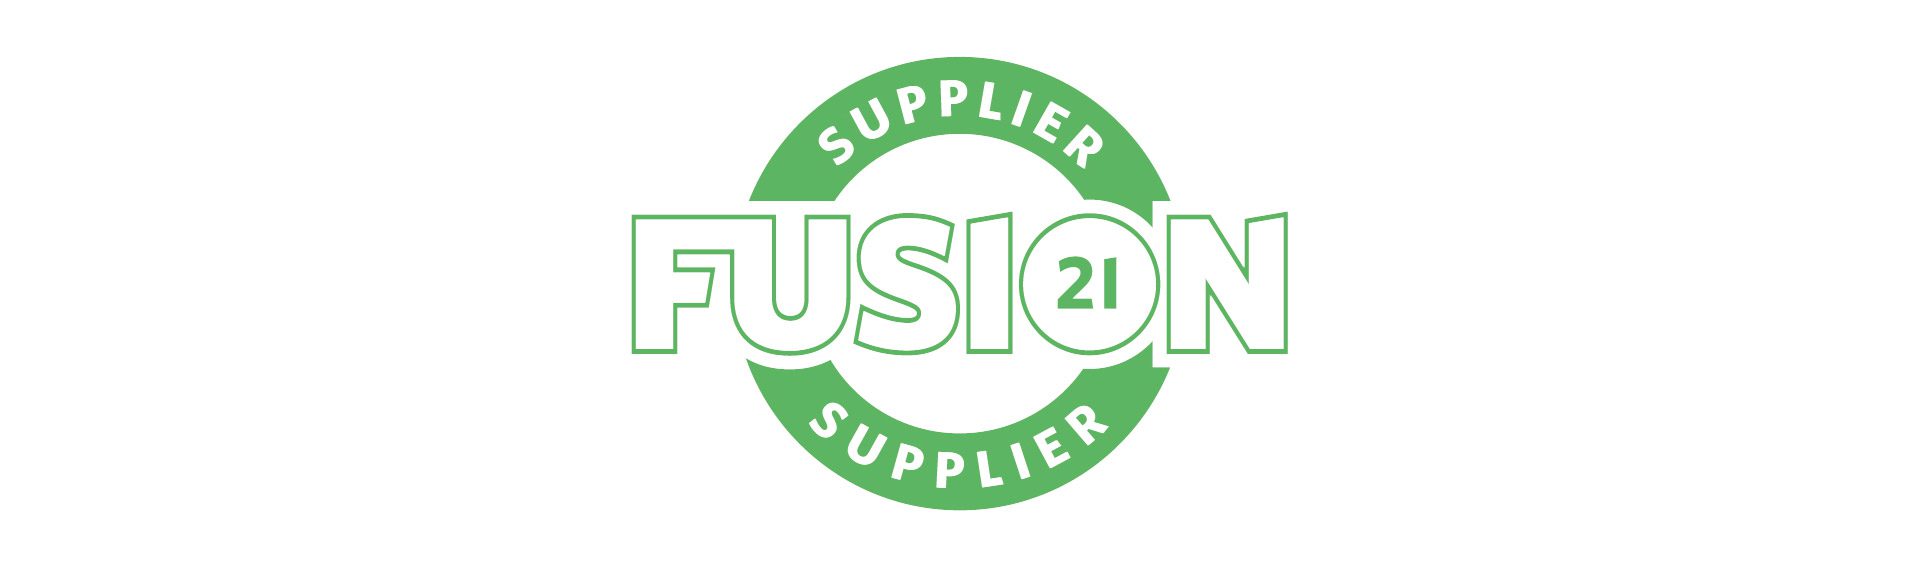 Fusion 21 Supplier Certificate Logo